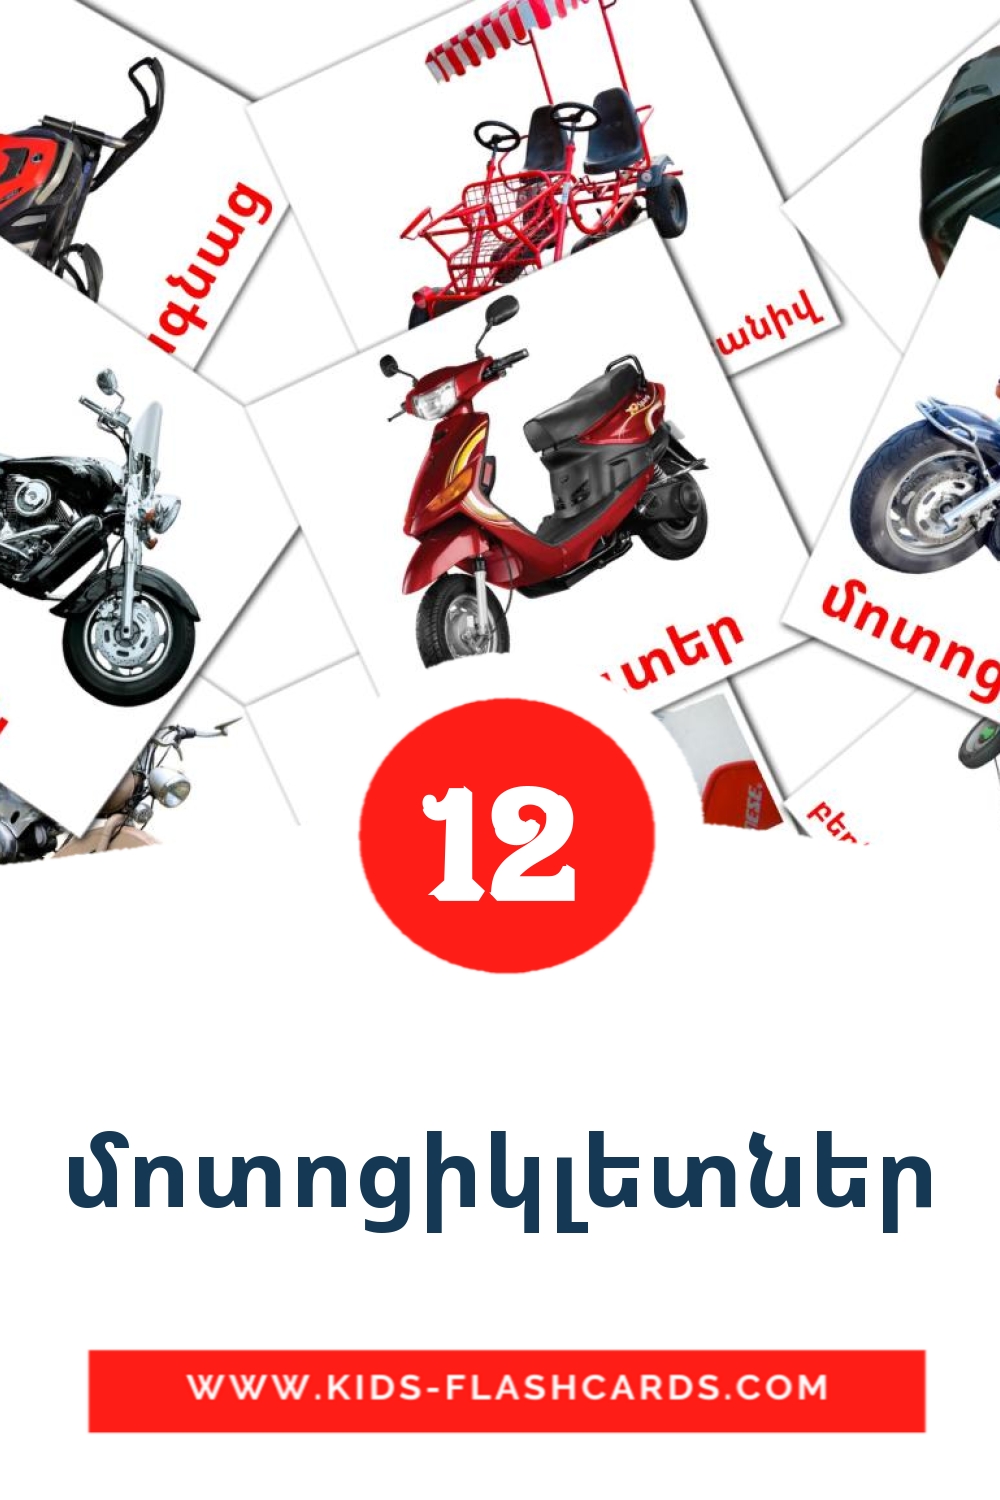 12 carte illustrate di մոտոցիկլետներ per la scuola materna in armeno